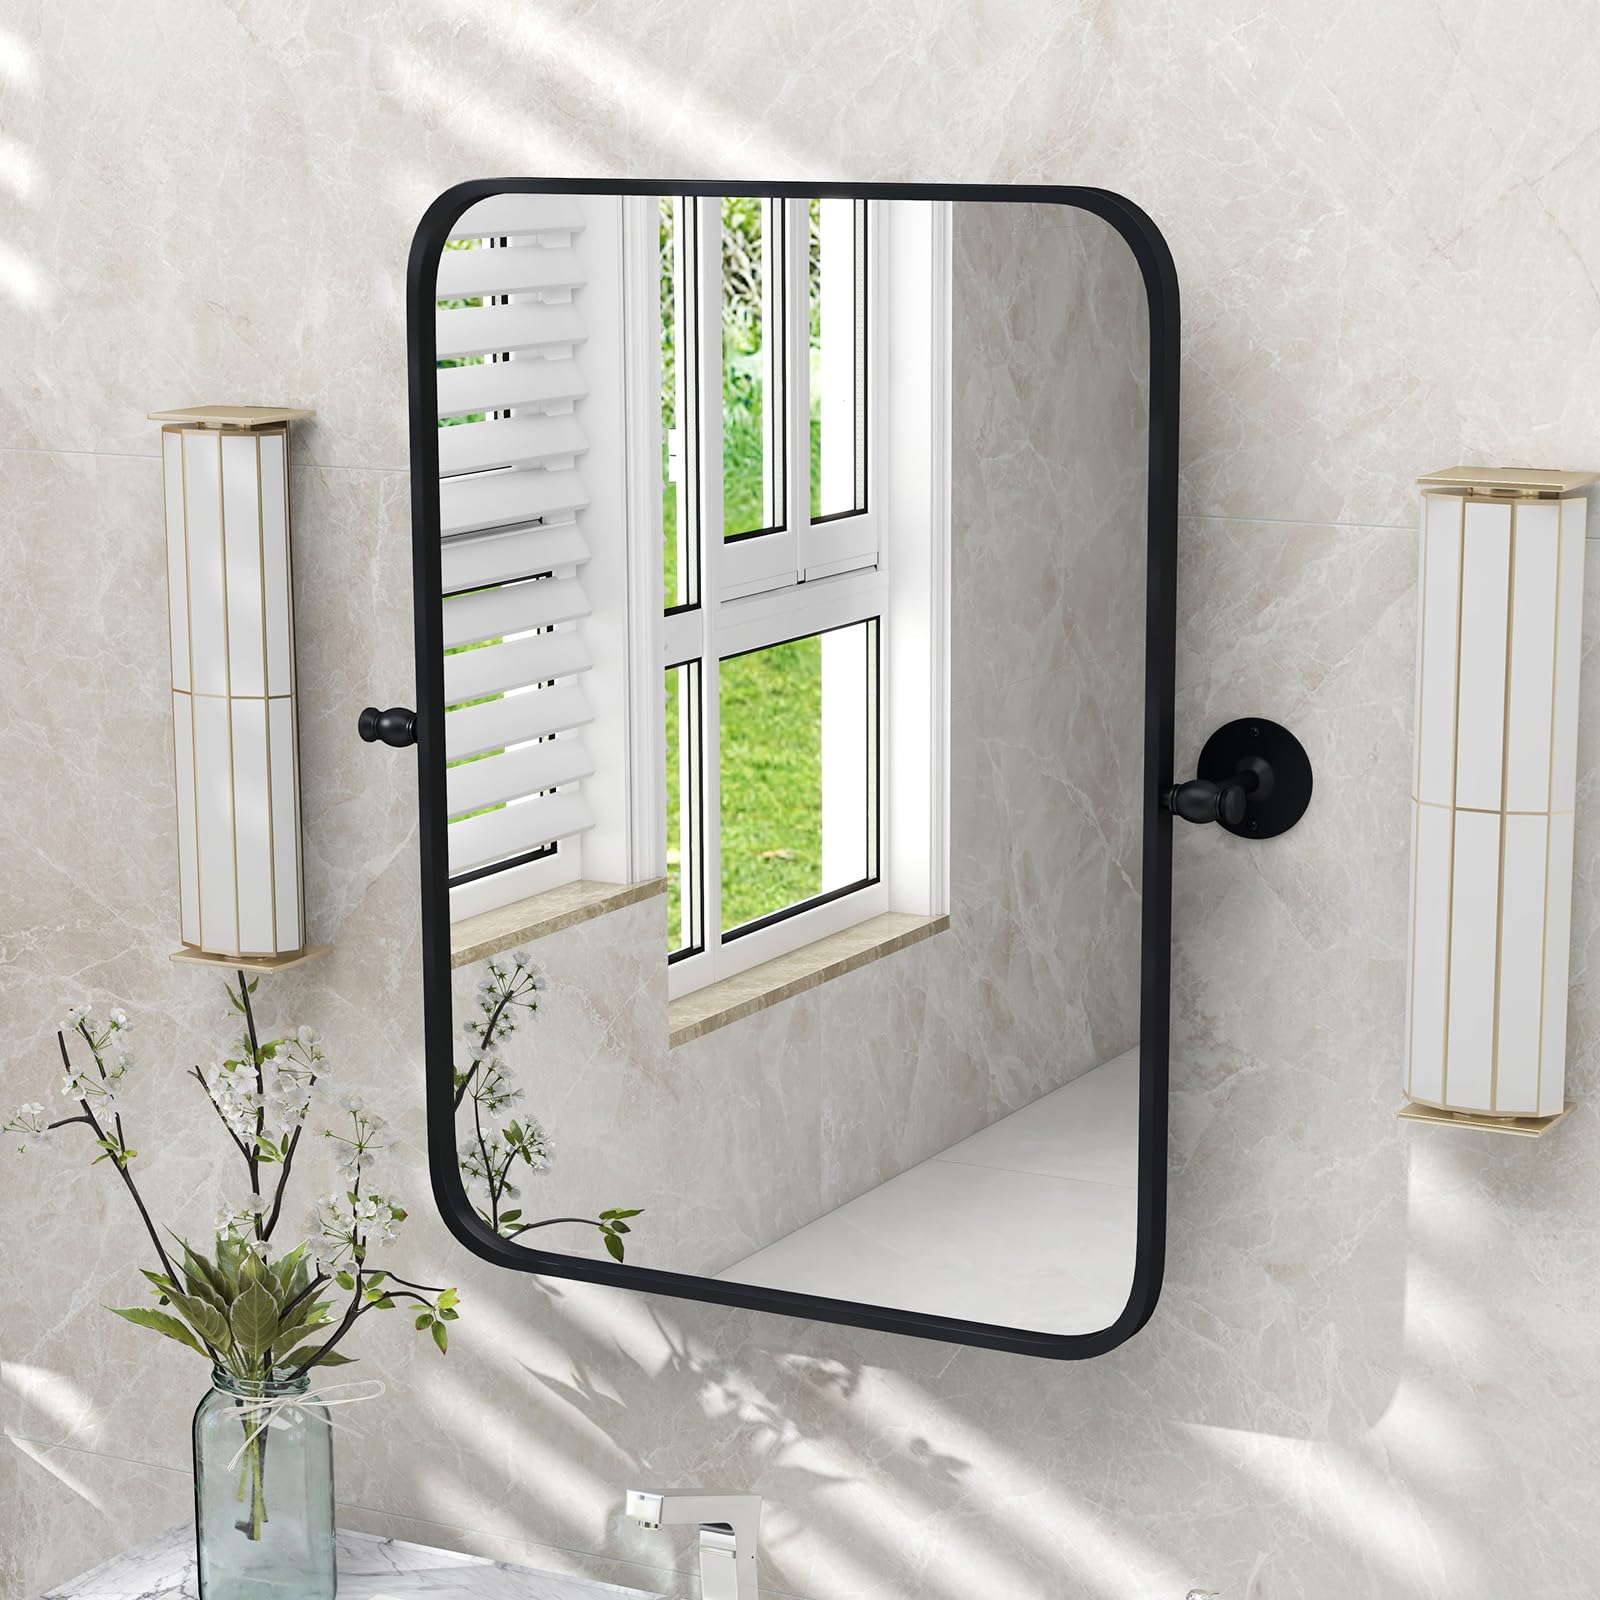 CHARMAID Wall Mirror for Bathroom